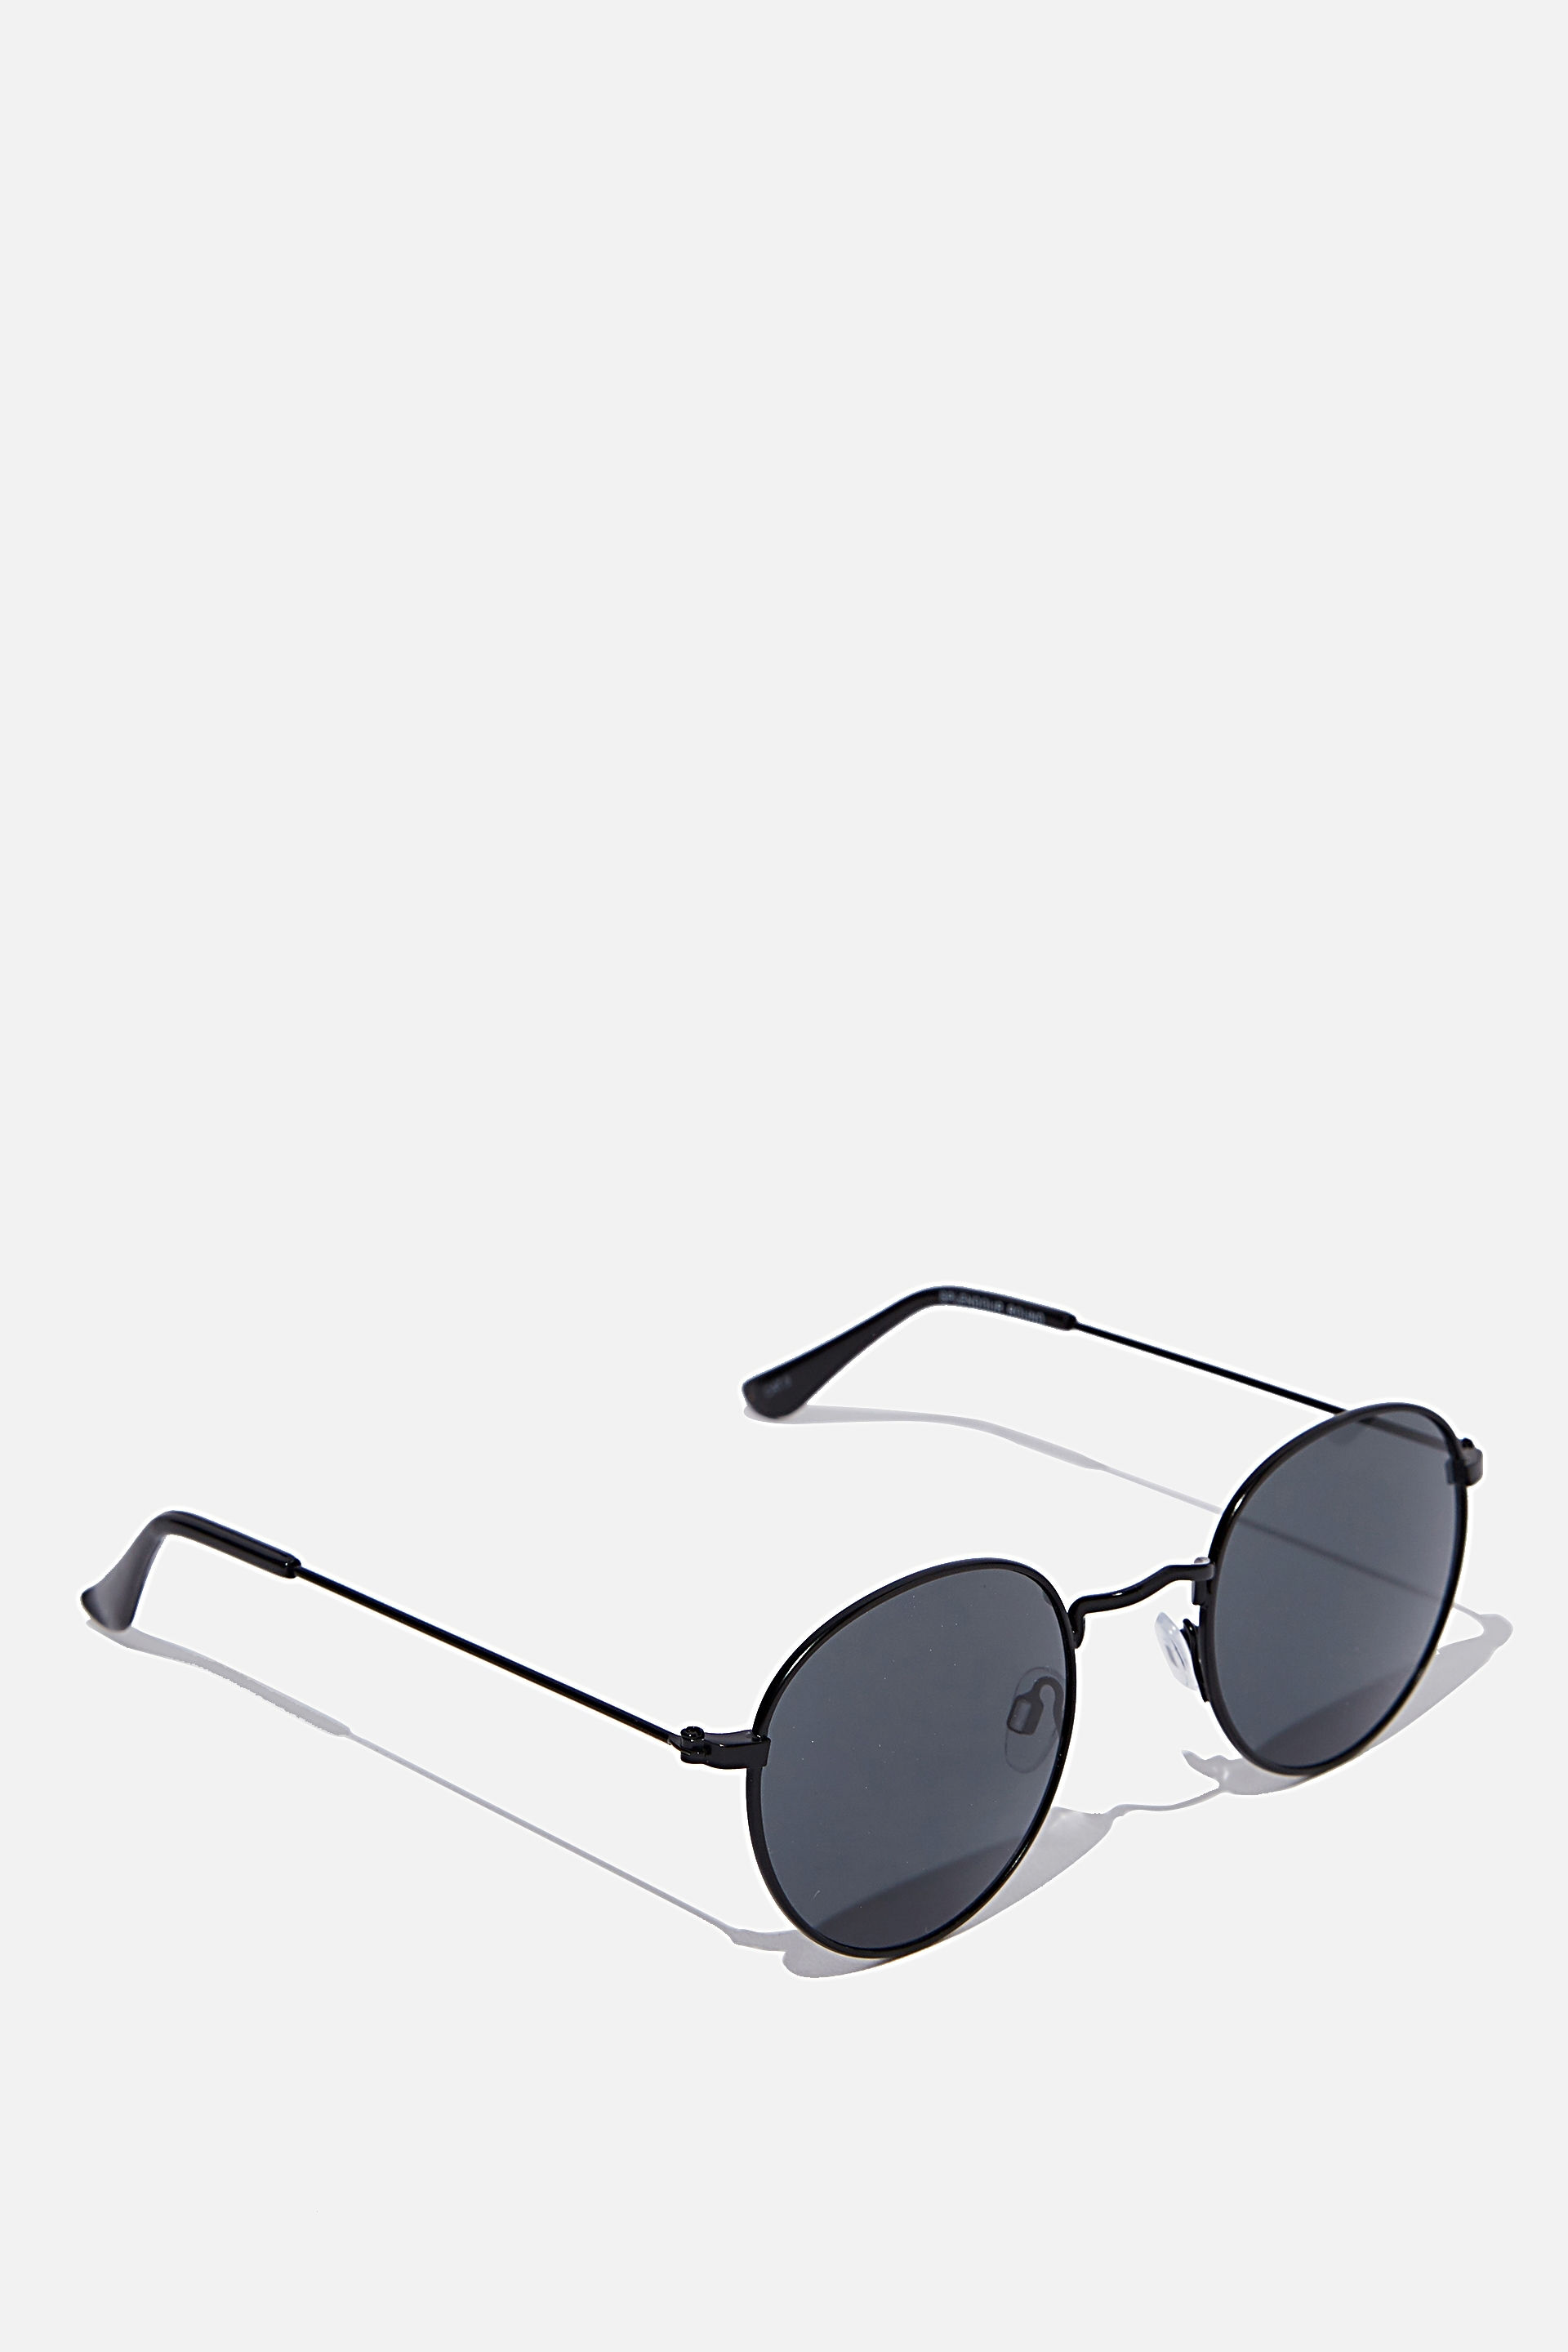 Factorie - Splendour Round Sunglasses - M black smk